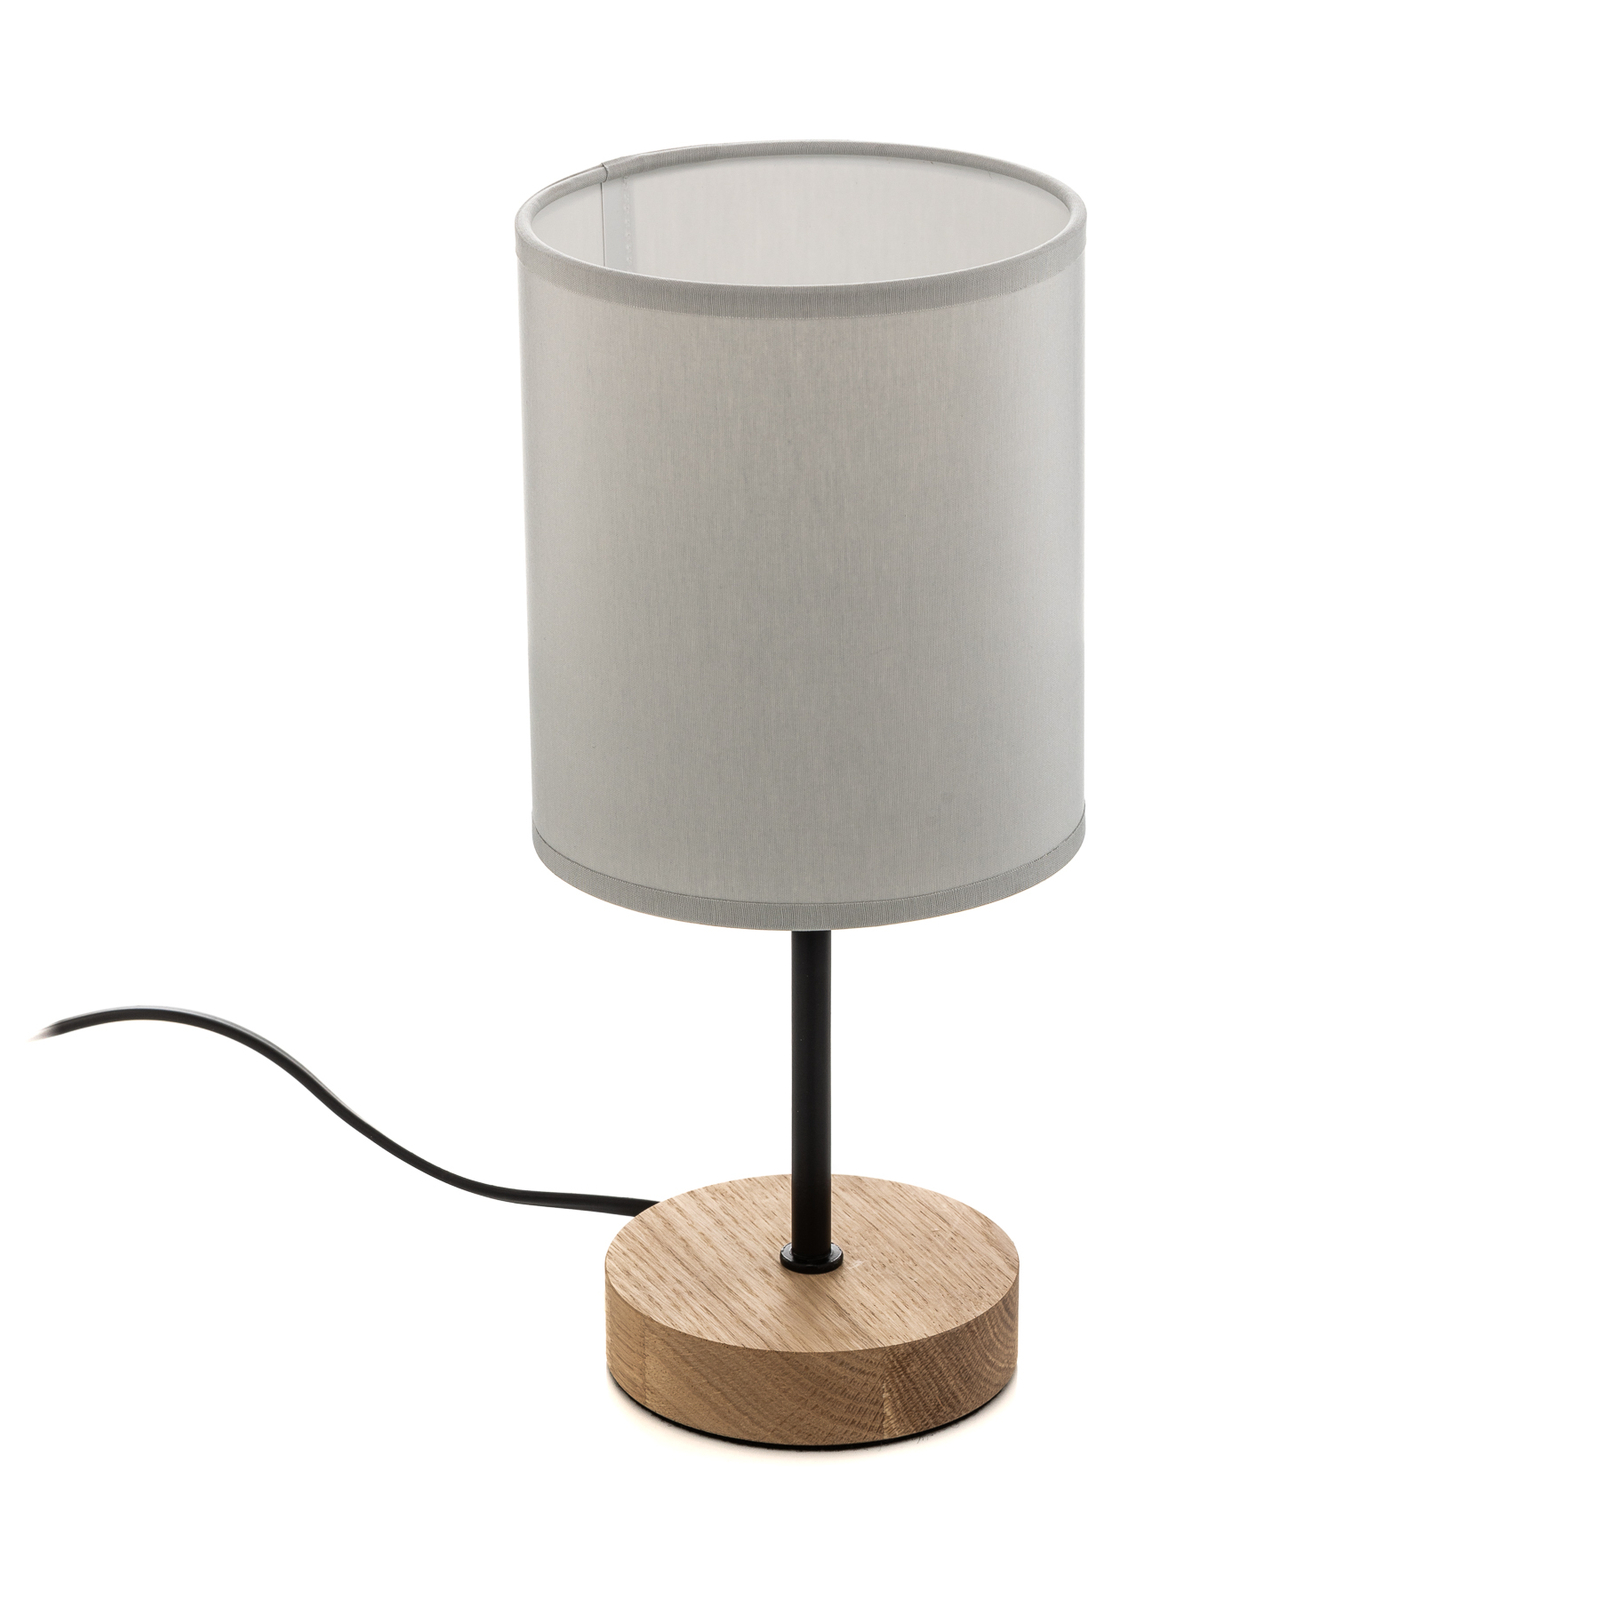 Tafellamp Corralee, hout en grijze stoffen kap